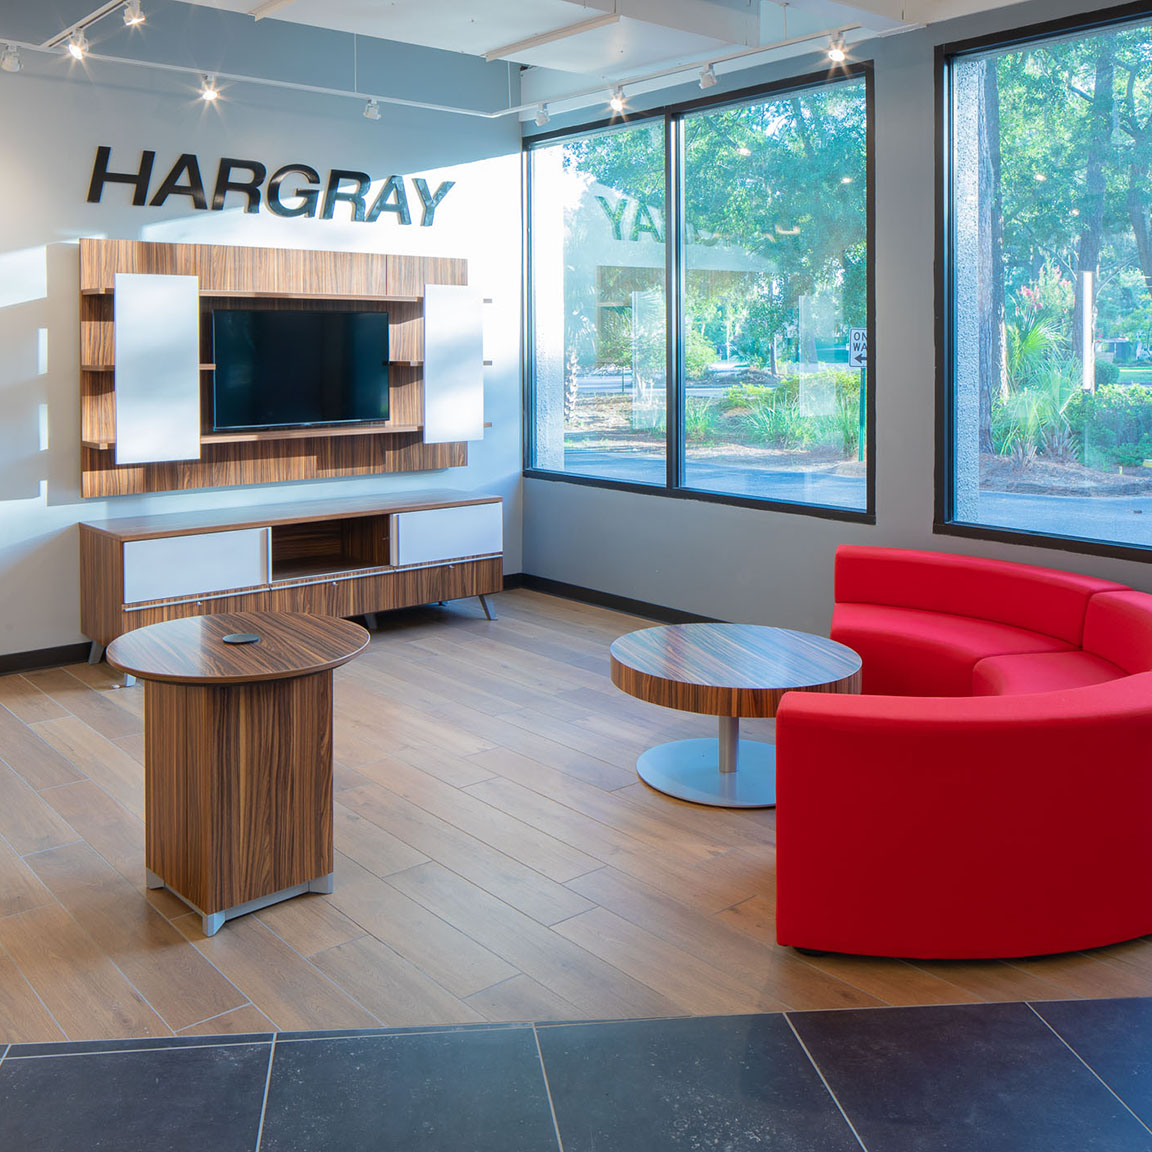 Hargray Retail - Hilton Head Island - Felder and Associates - Savannah, GA